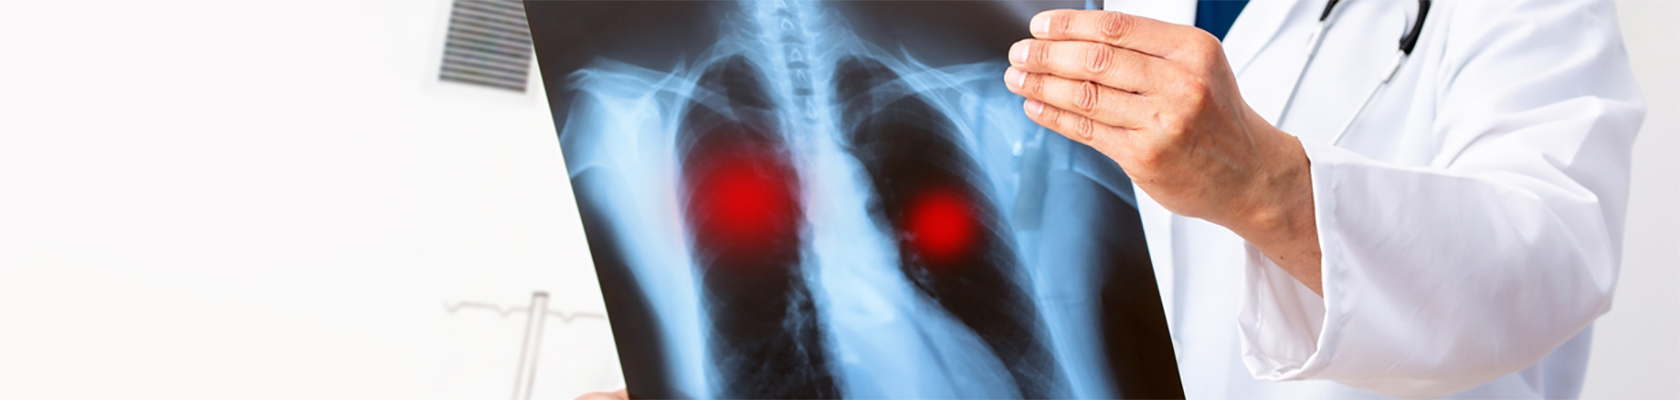 Tuberculoza: simptome, diagnostic, tratament